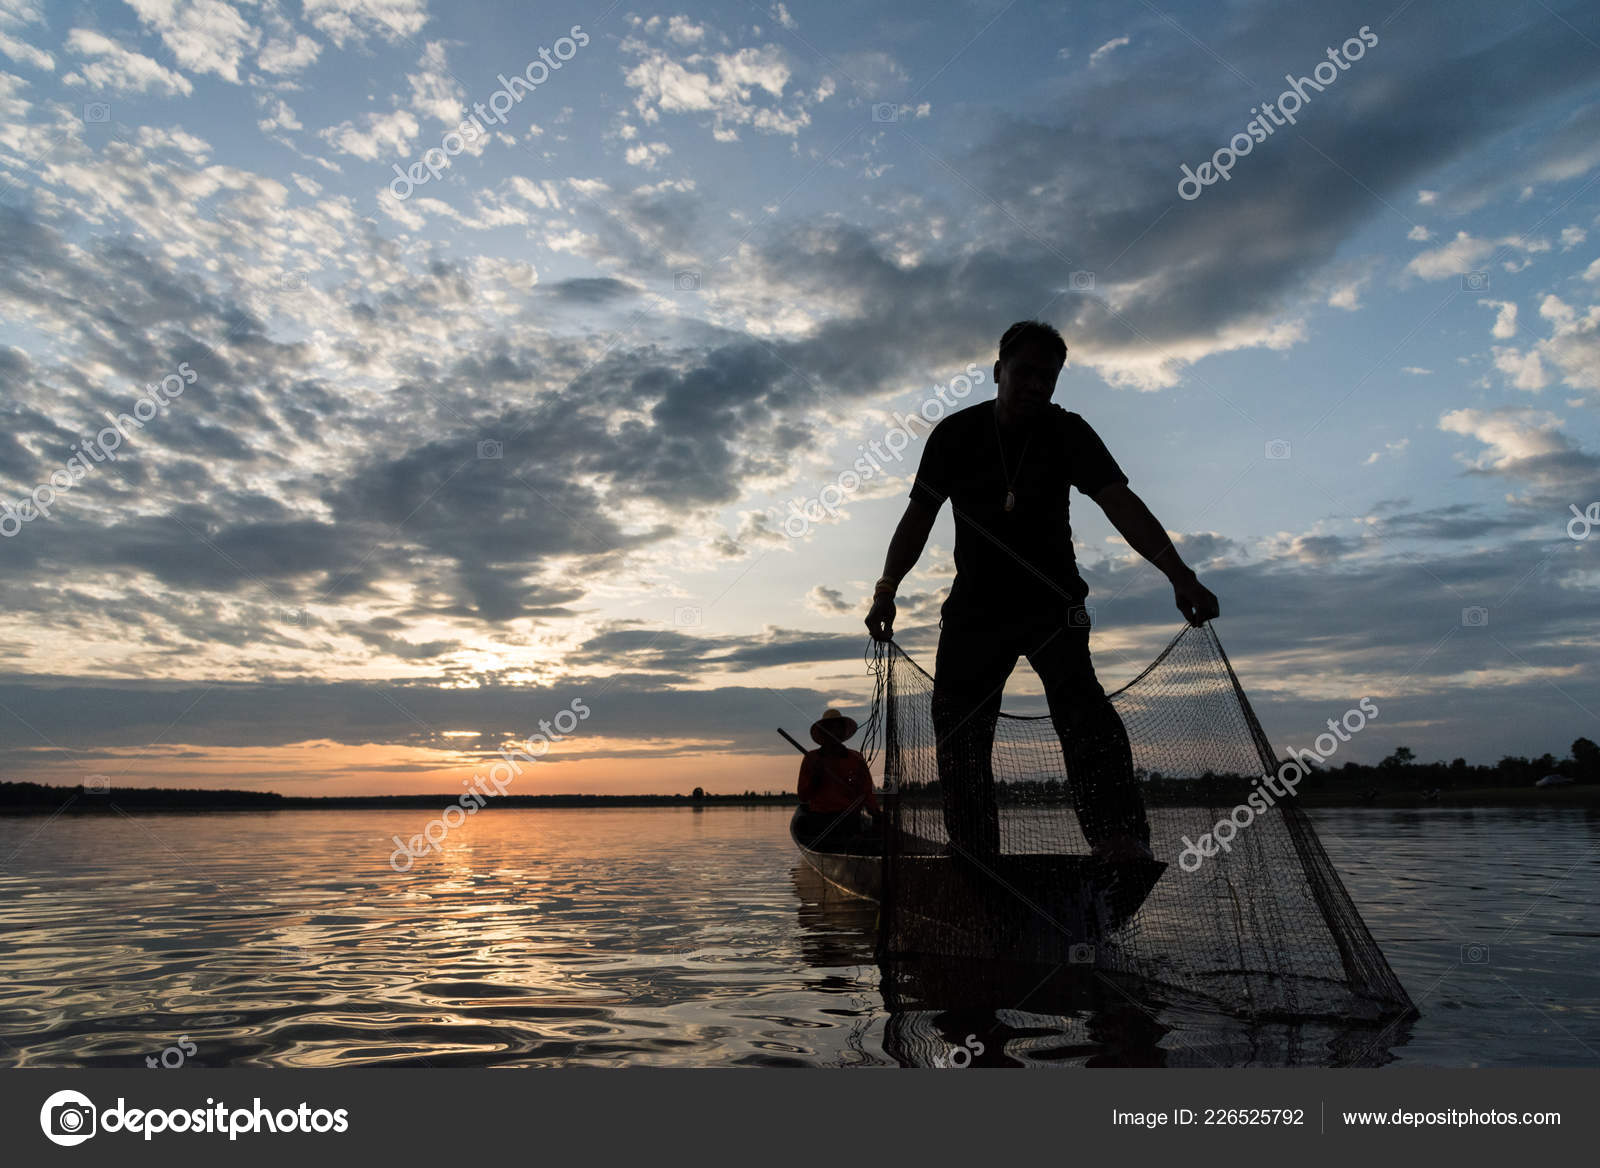 https://st4.depositphotos.com/15647408/22652/i/1600/depositphotos_226525792-stock-photo-silhouette-fishermen-throwing-net-fishing.jpg